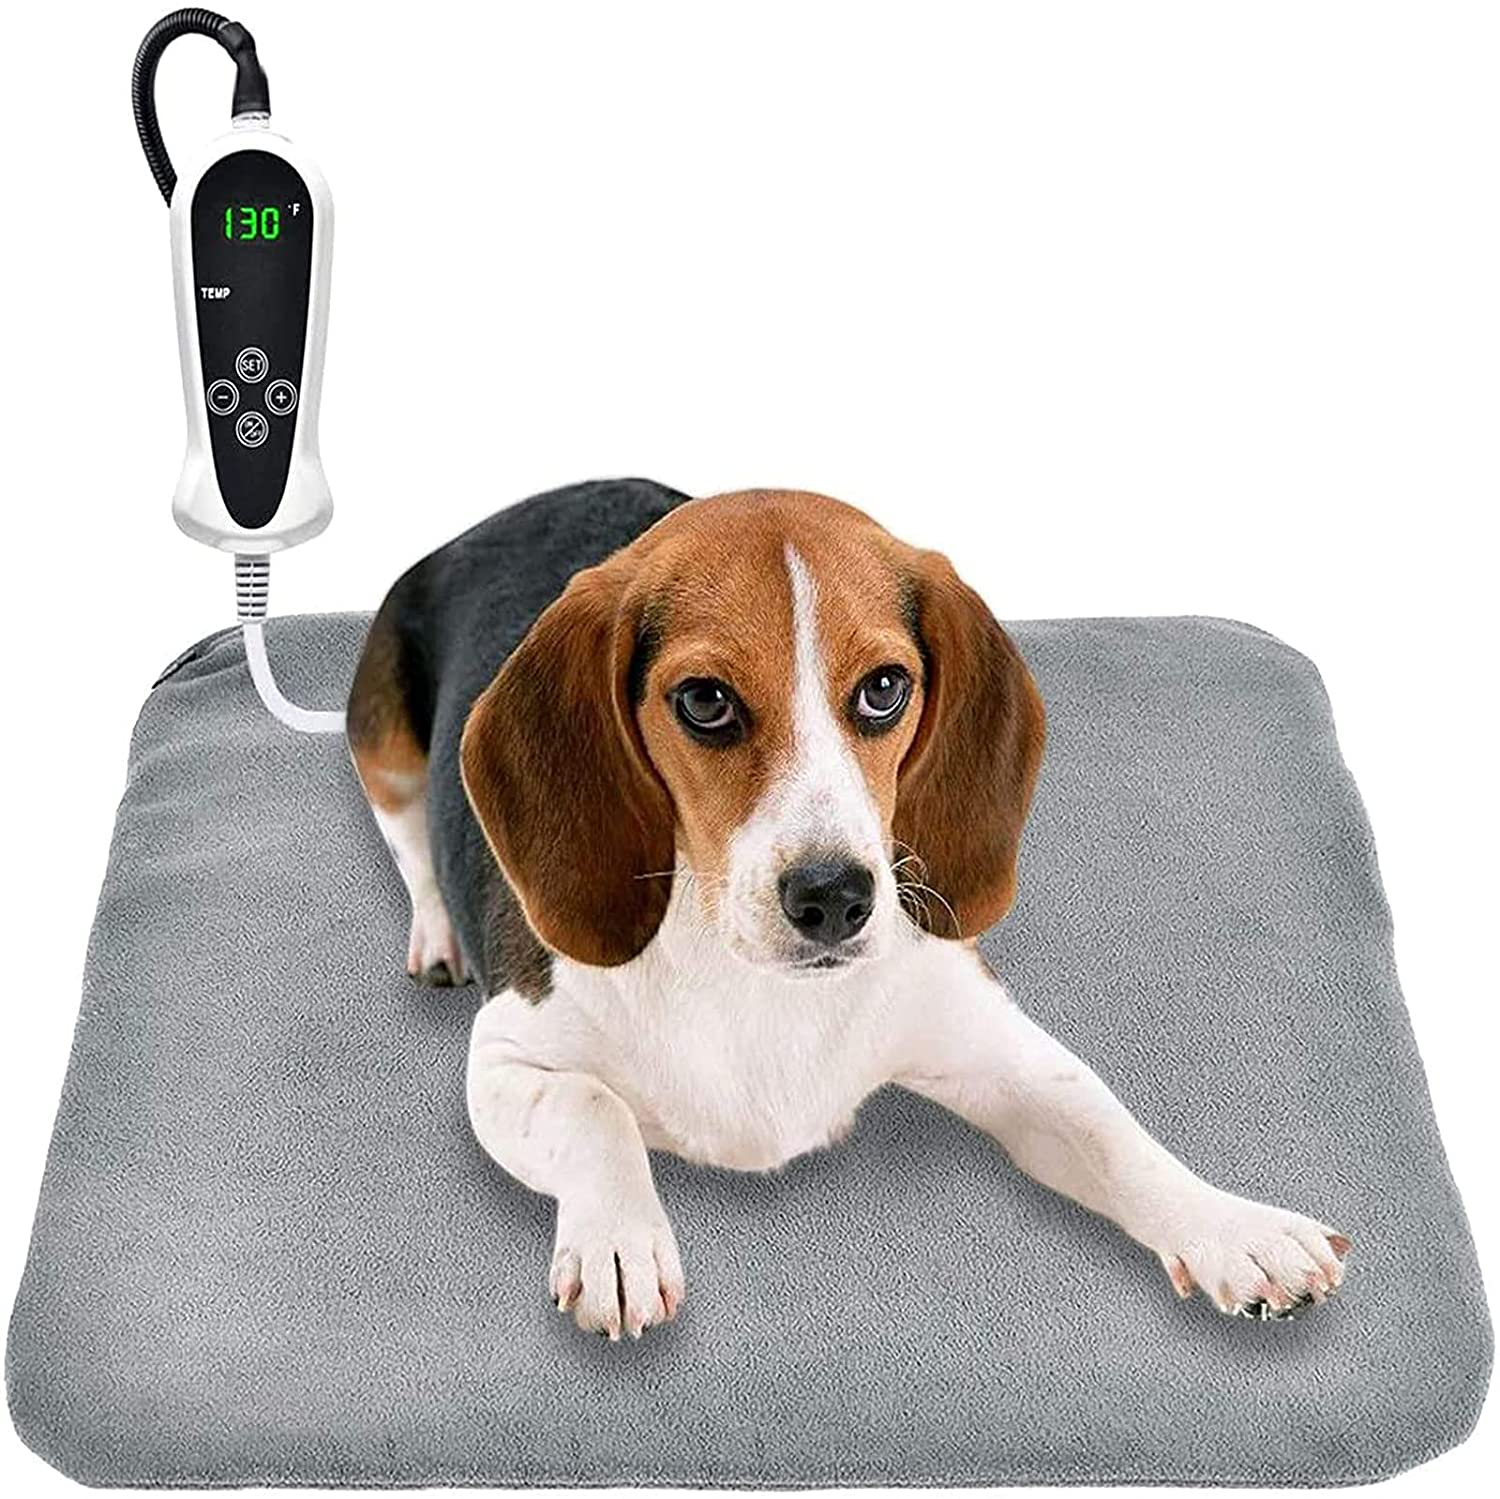 RIOGOO Pet Heating Pad, Upgraded Electric Dog Cat Heating Pad Indoor Waterproof, Auto Power Off